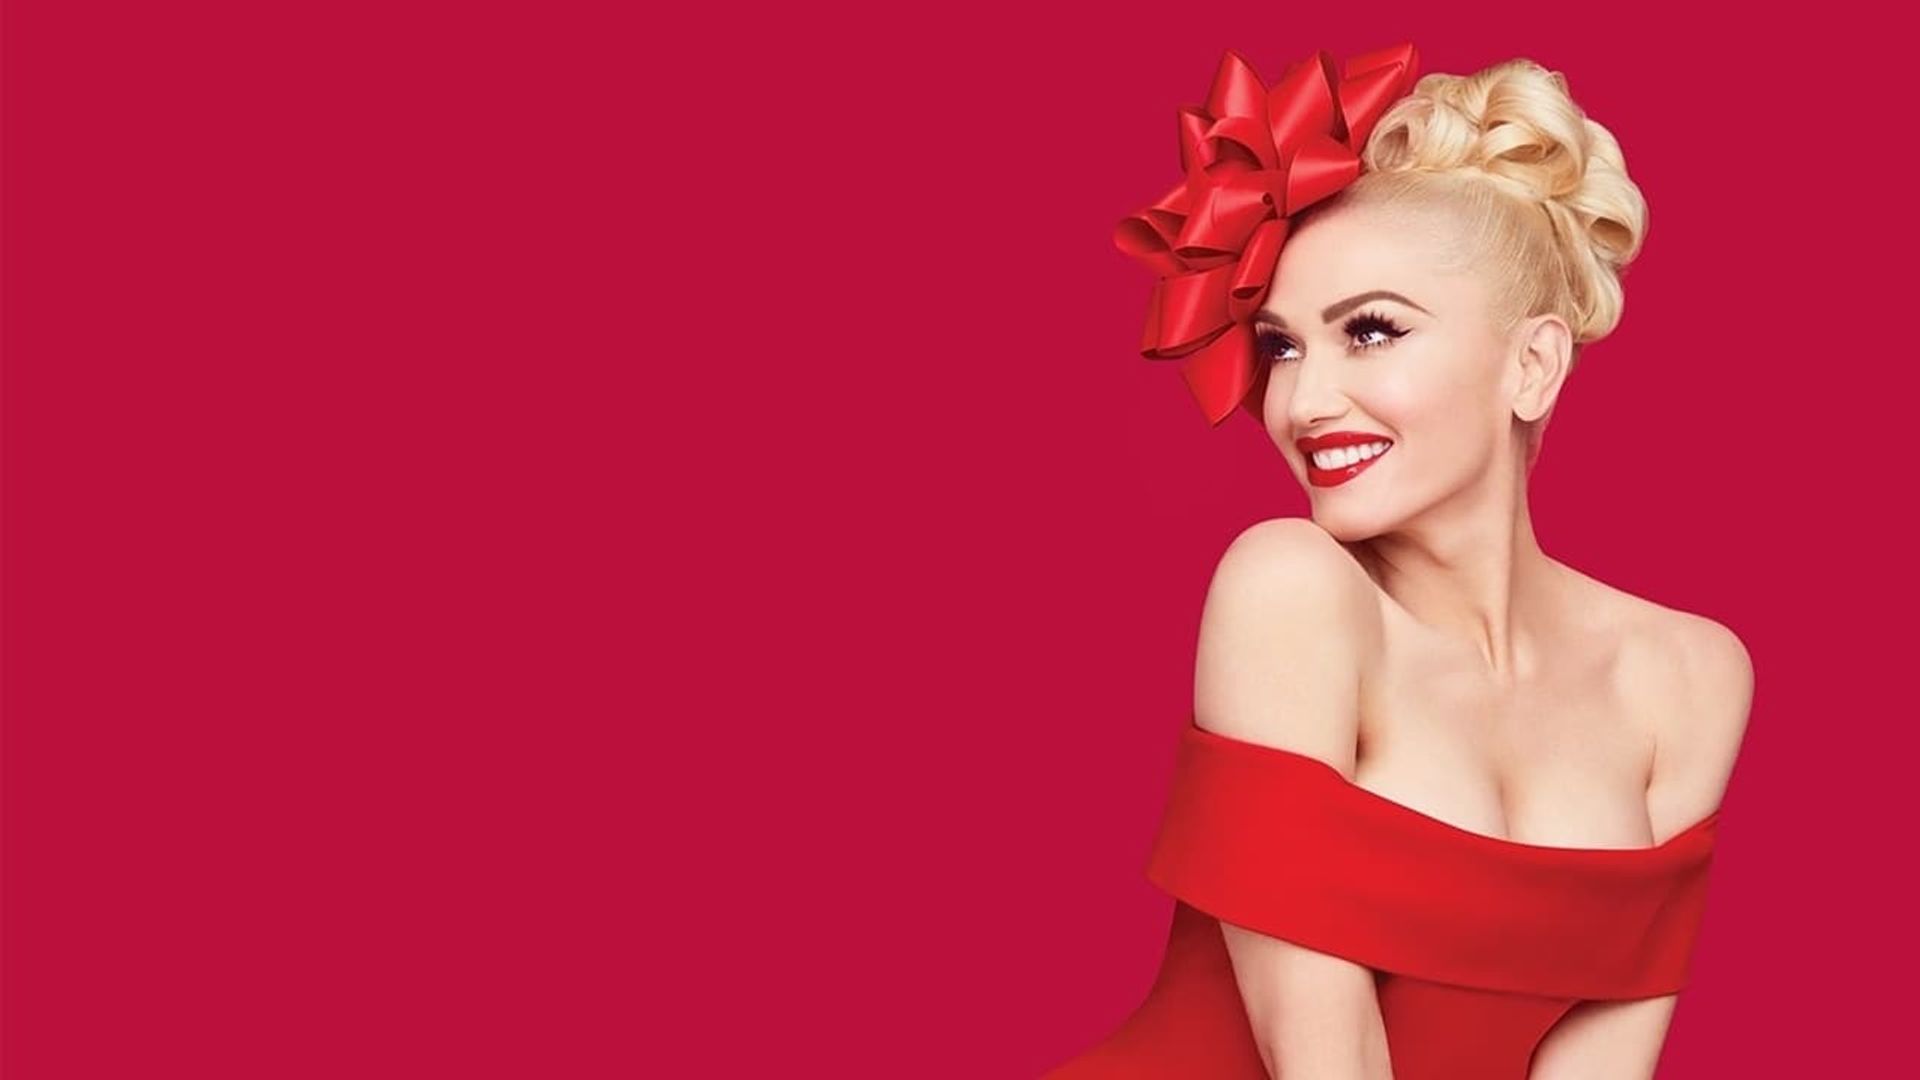 Gwen Stefani's You Make It Feel Like Christmas background